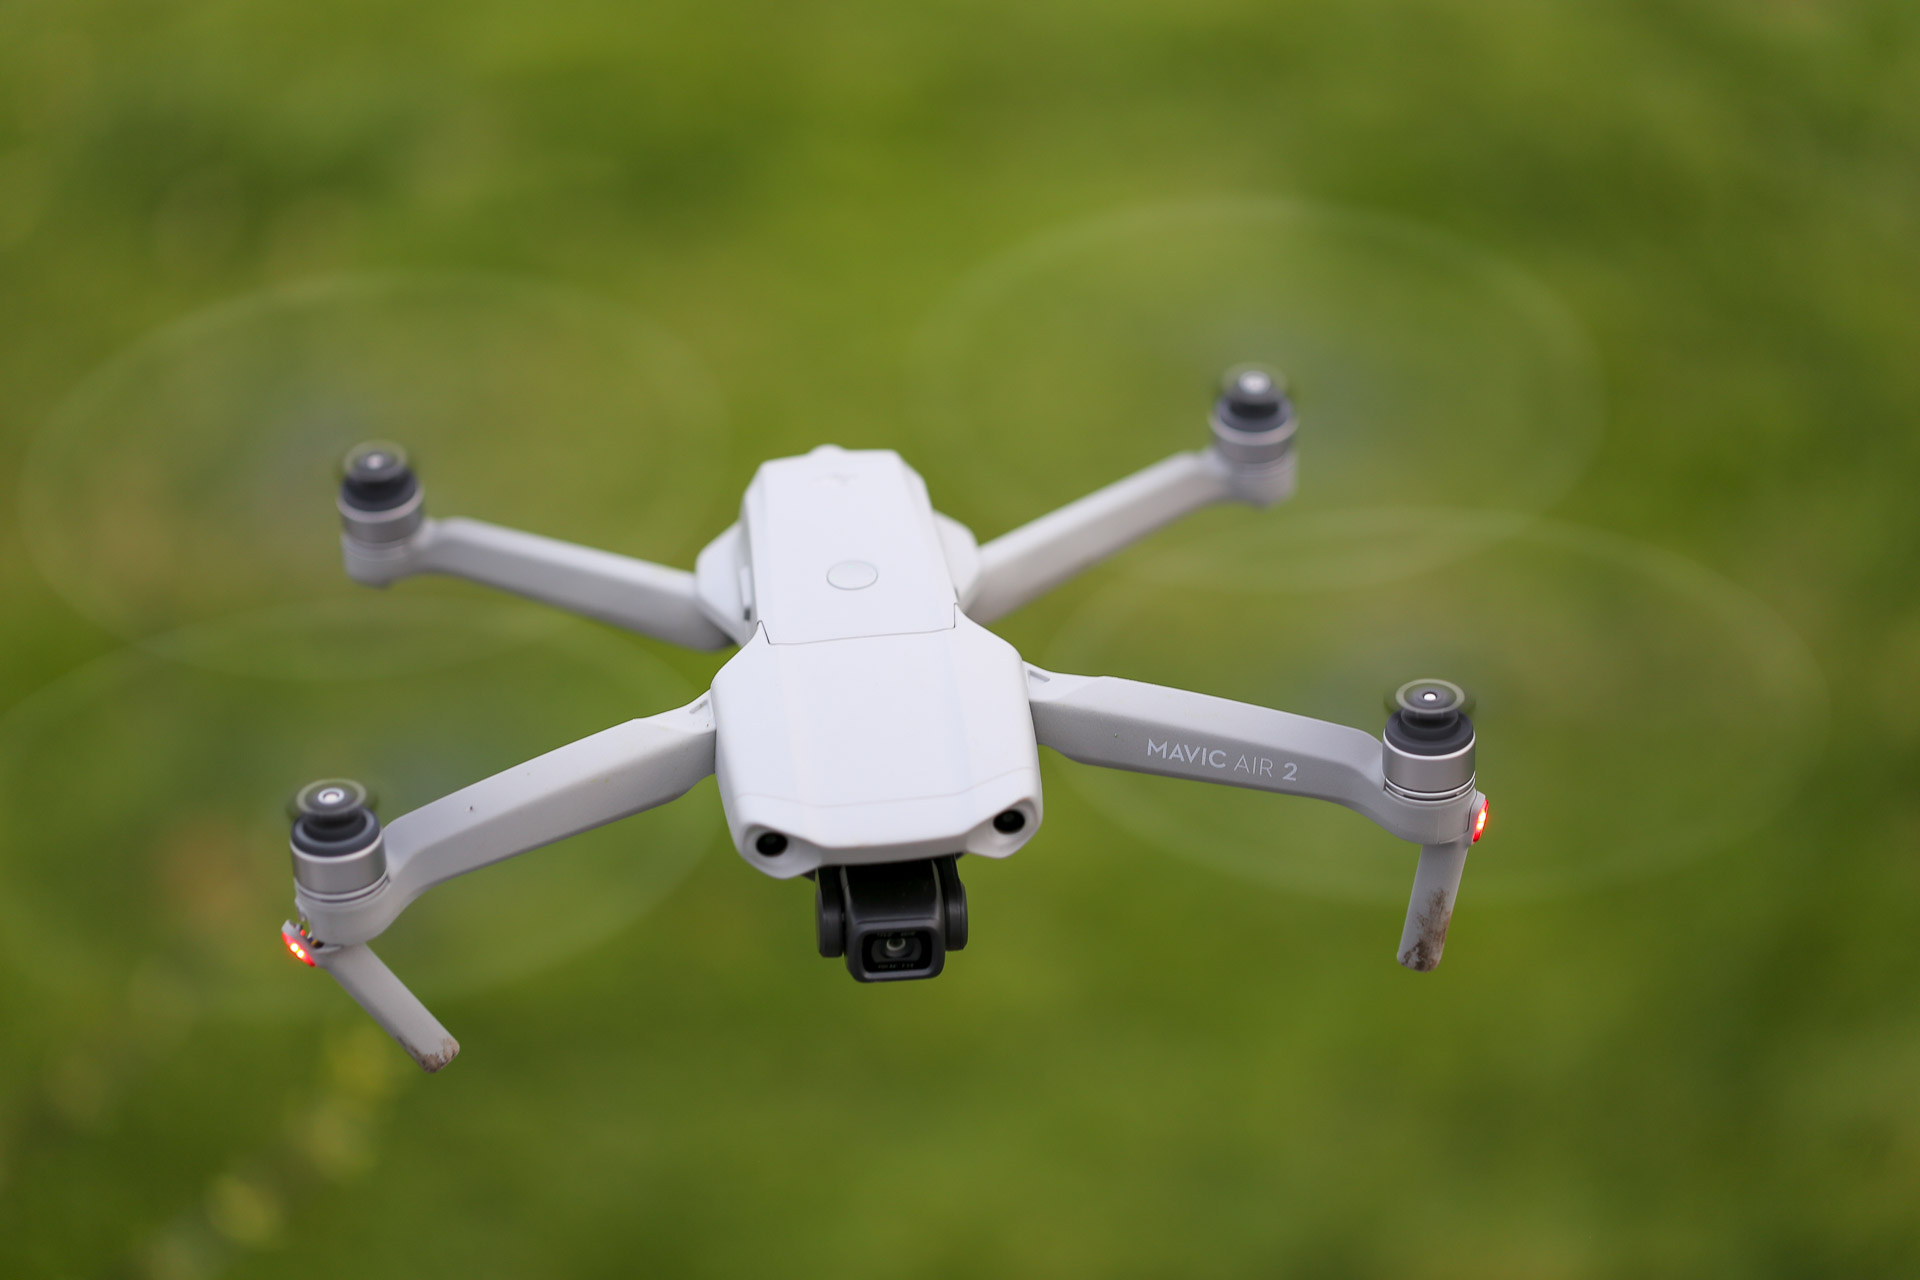 DJI Mavic Air 2 Review: Fantastic drone, despite obstacle avoidance blindspots